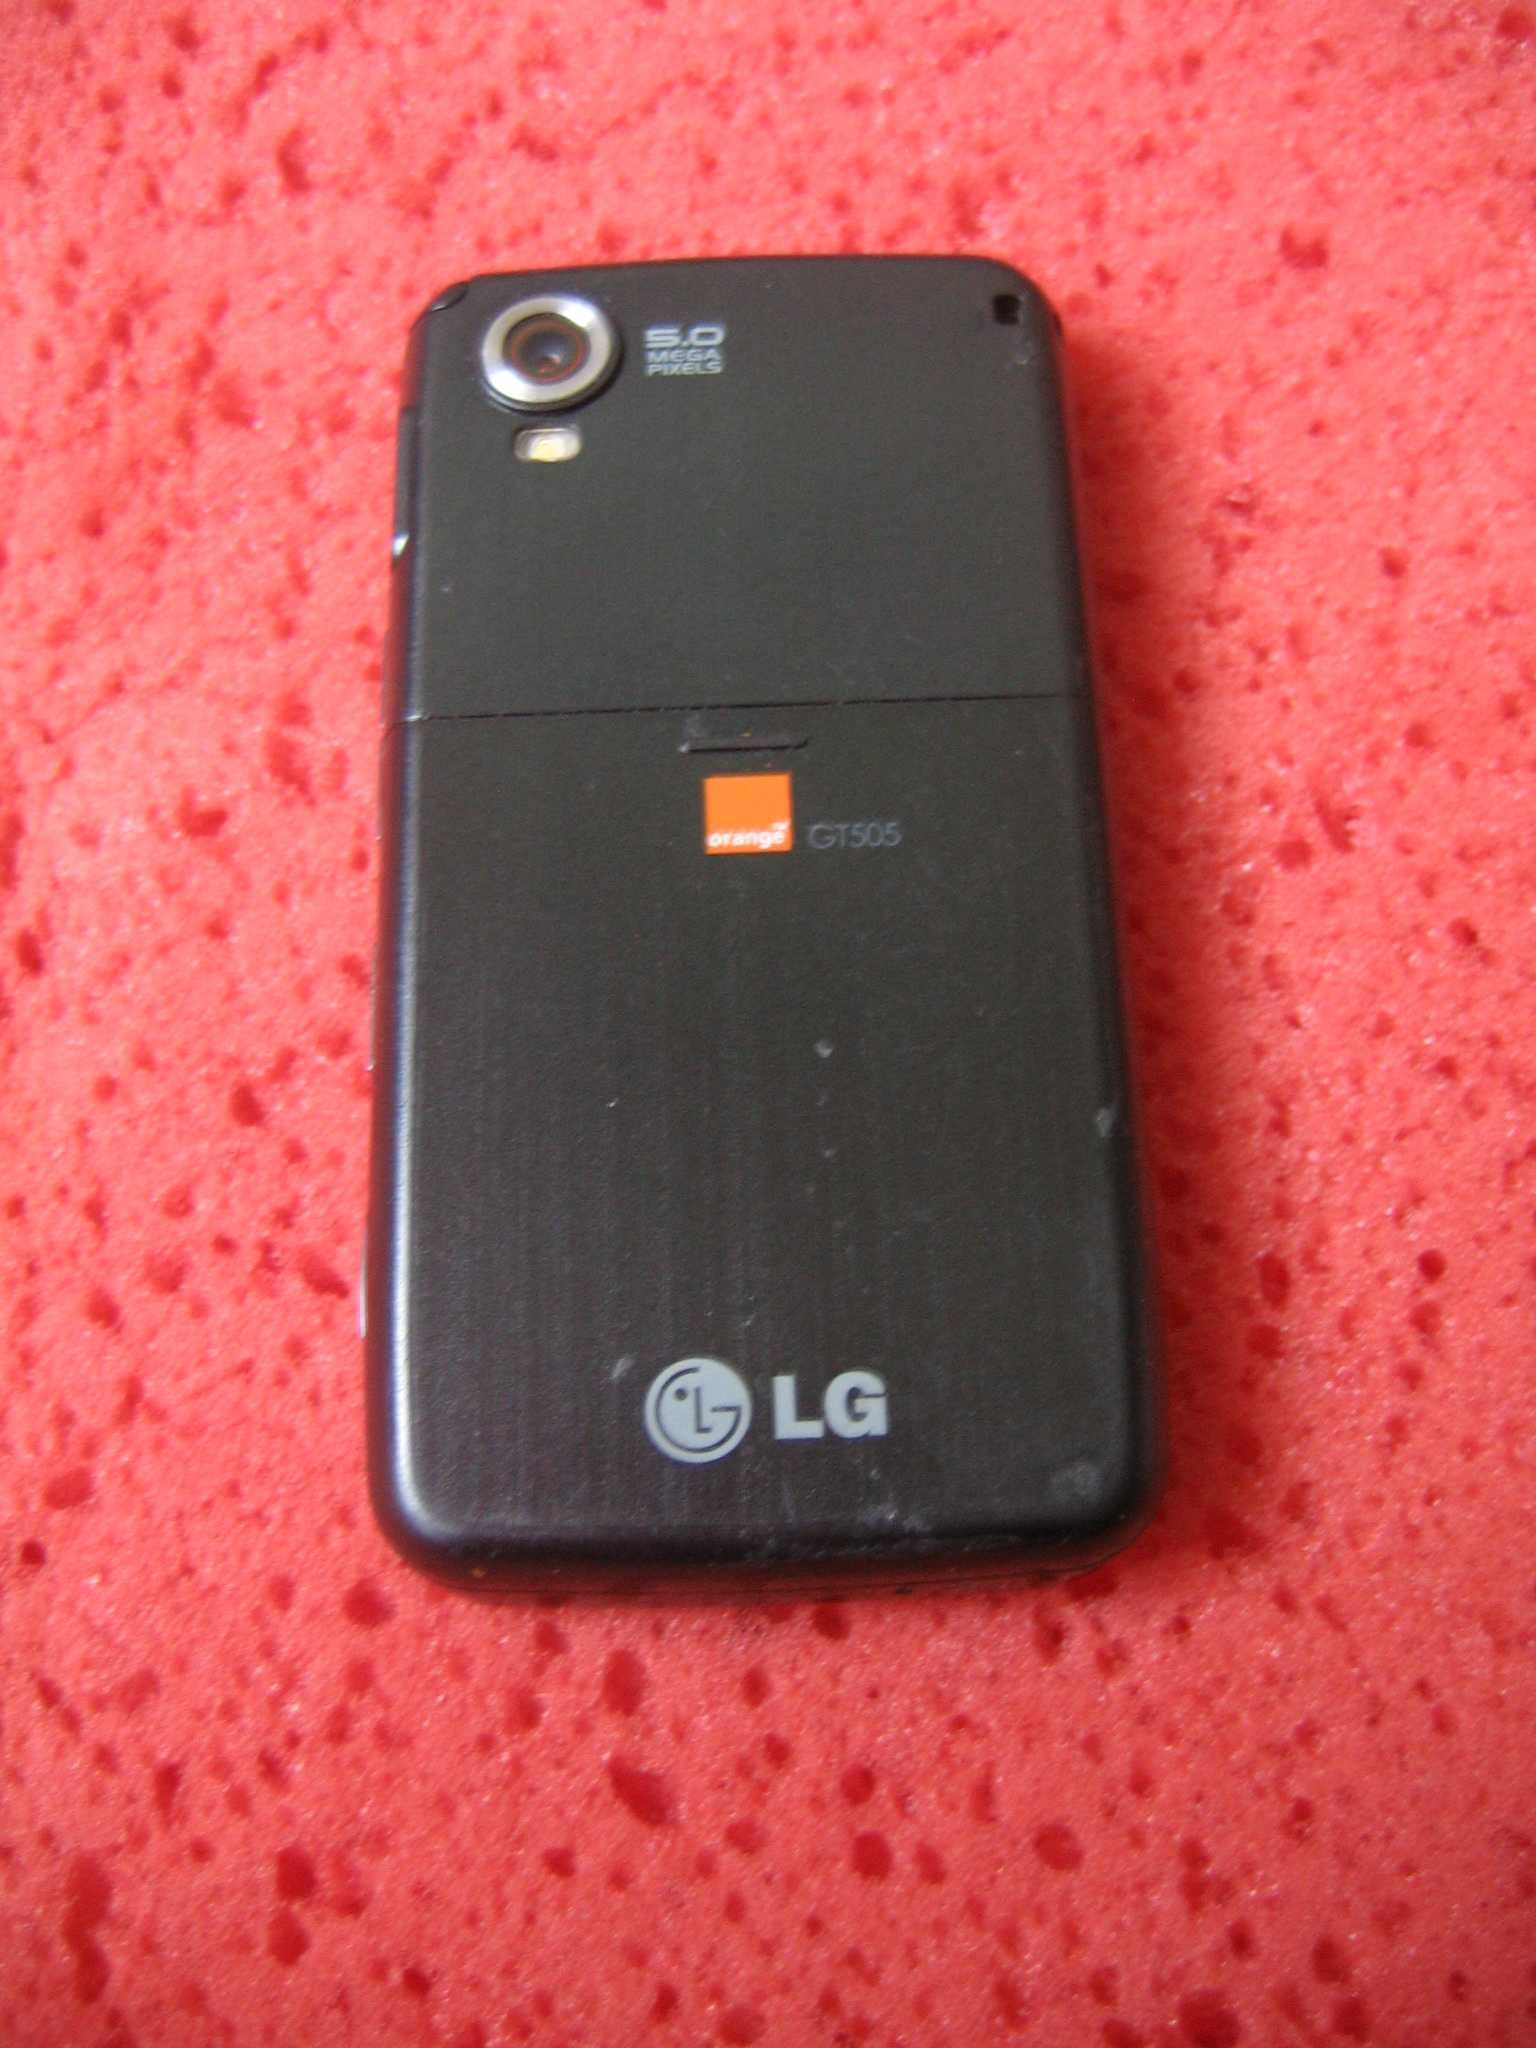 Mały smartfon 3"  LG GT-505